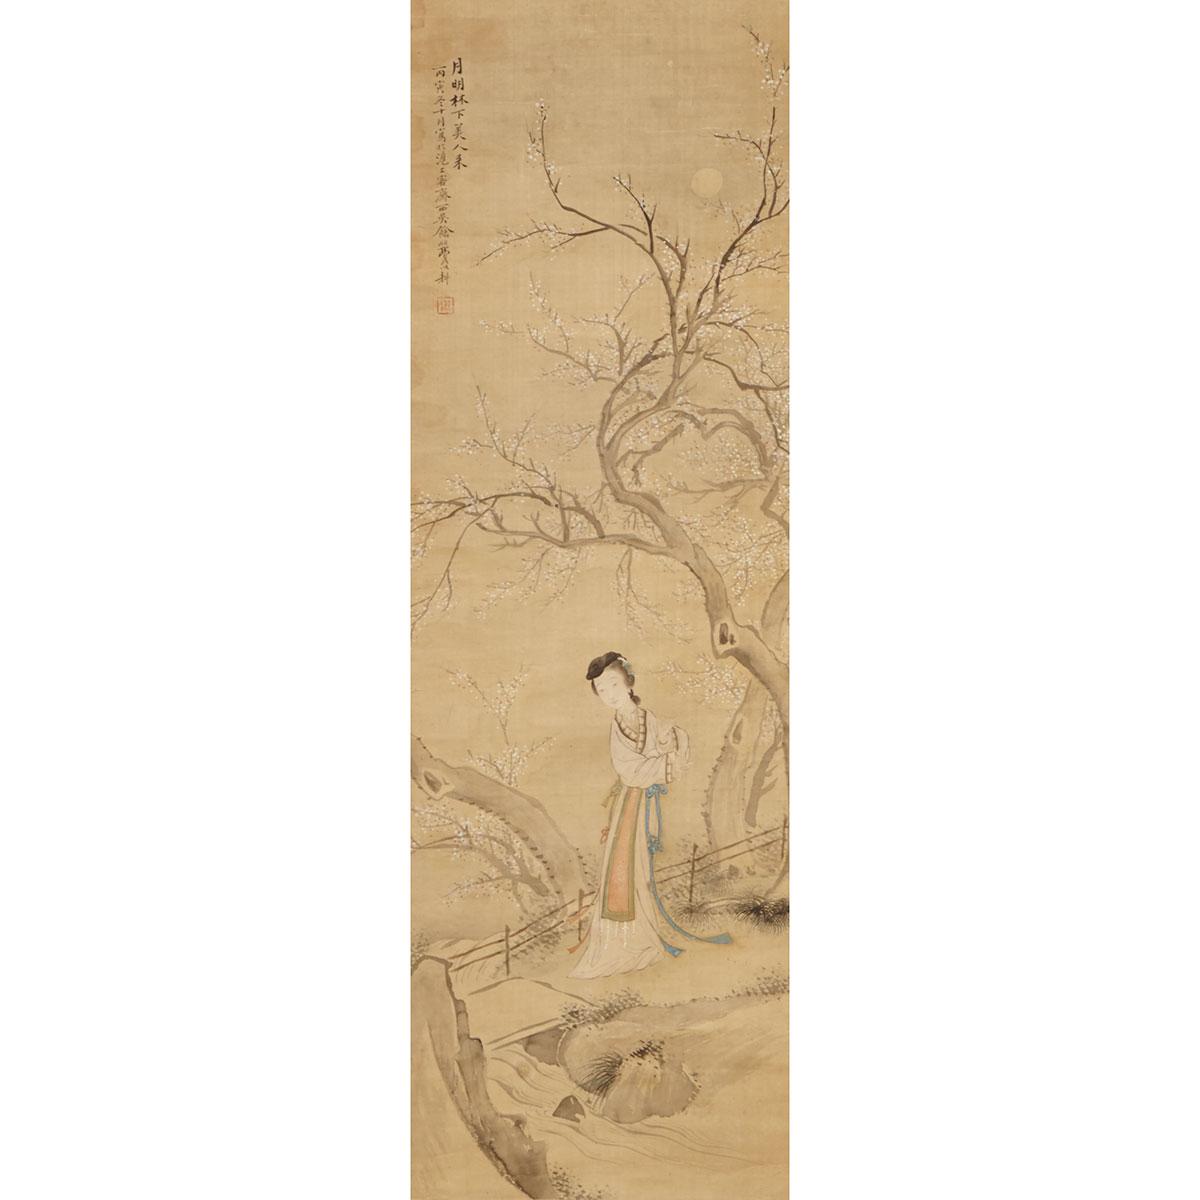 Attributed to Fei Yigeng (?-1870)